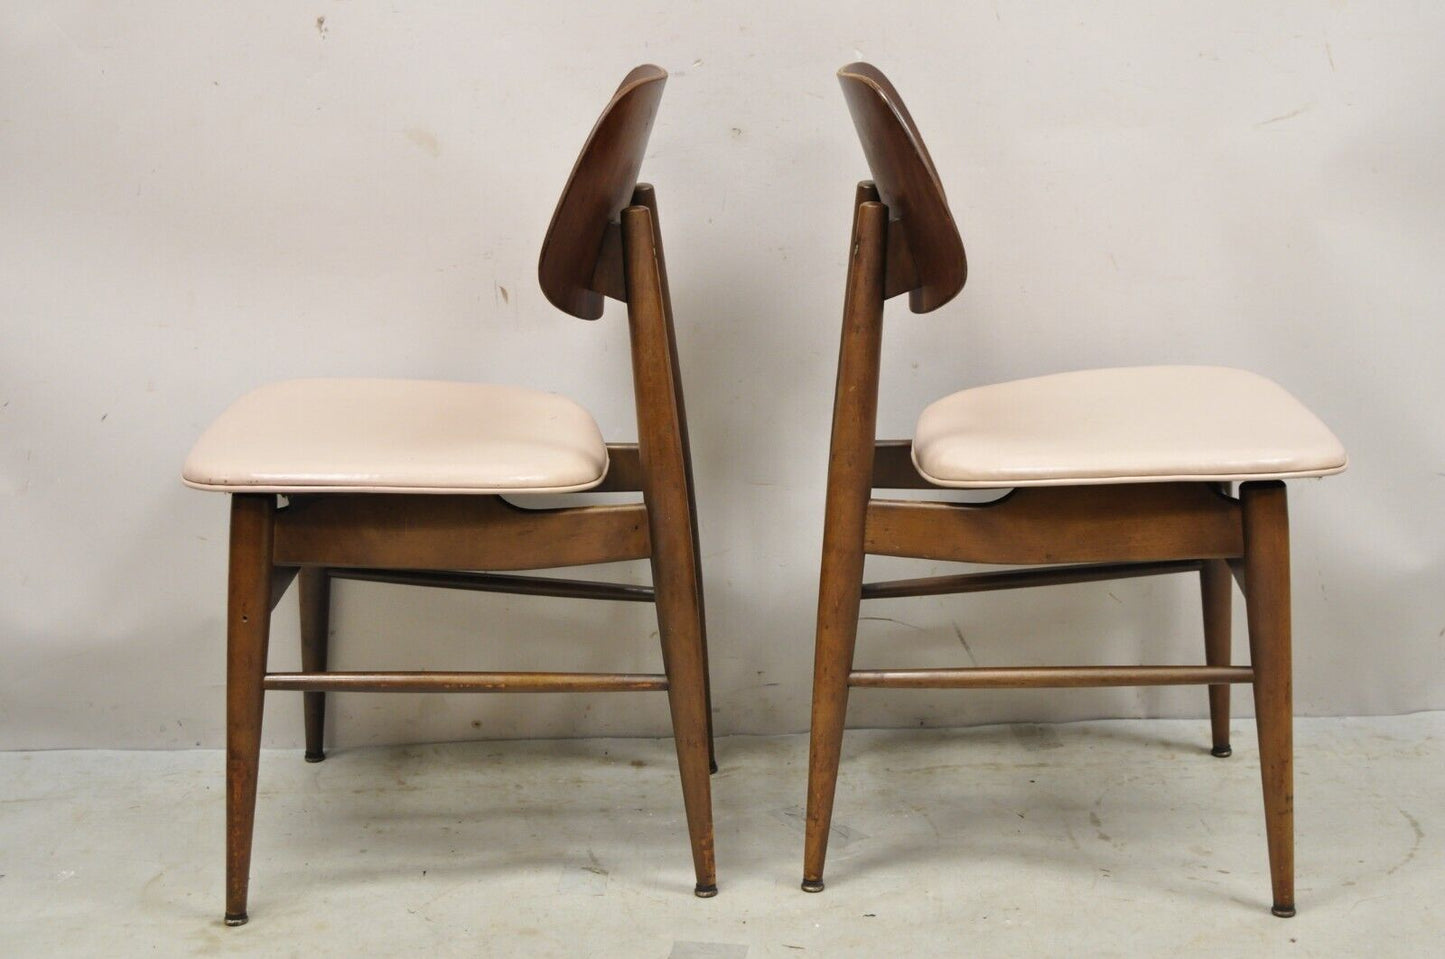 Vintage Thonet Mid Century Modern Bentwood Walnut Dining Chairs - Set of 4